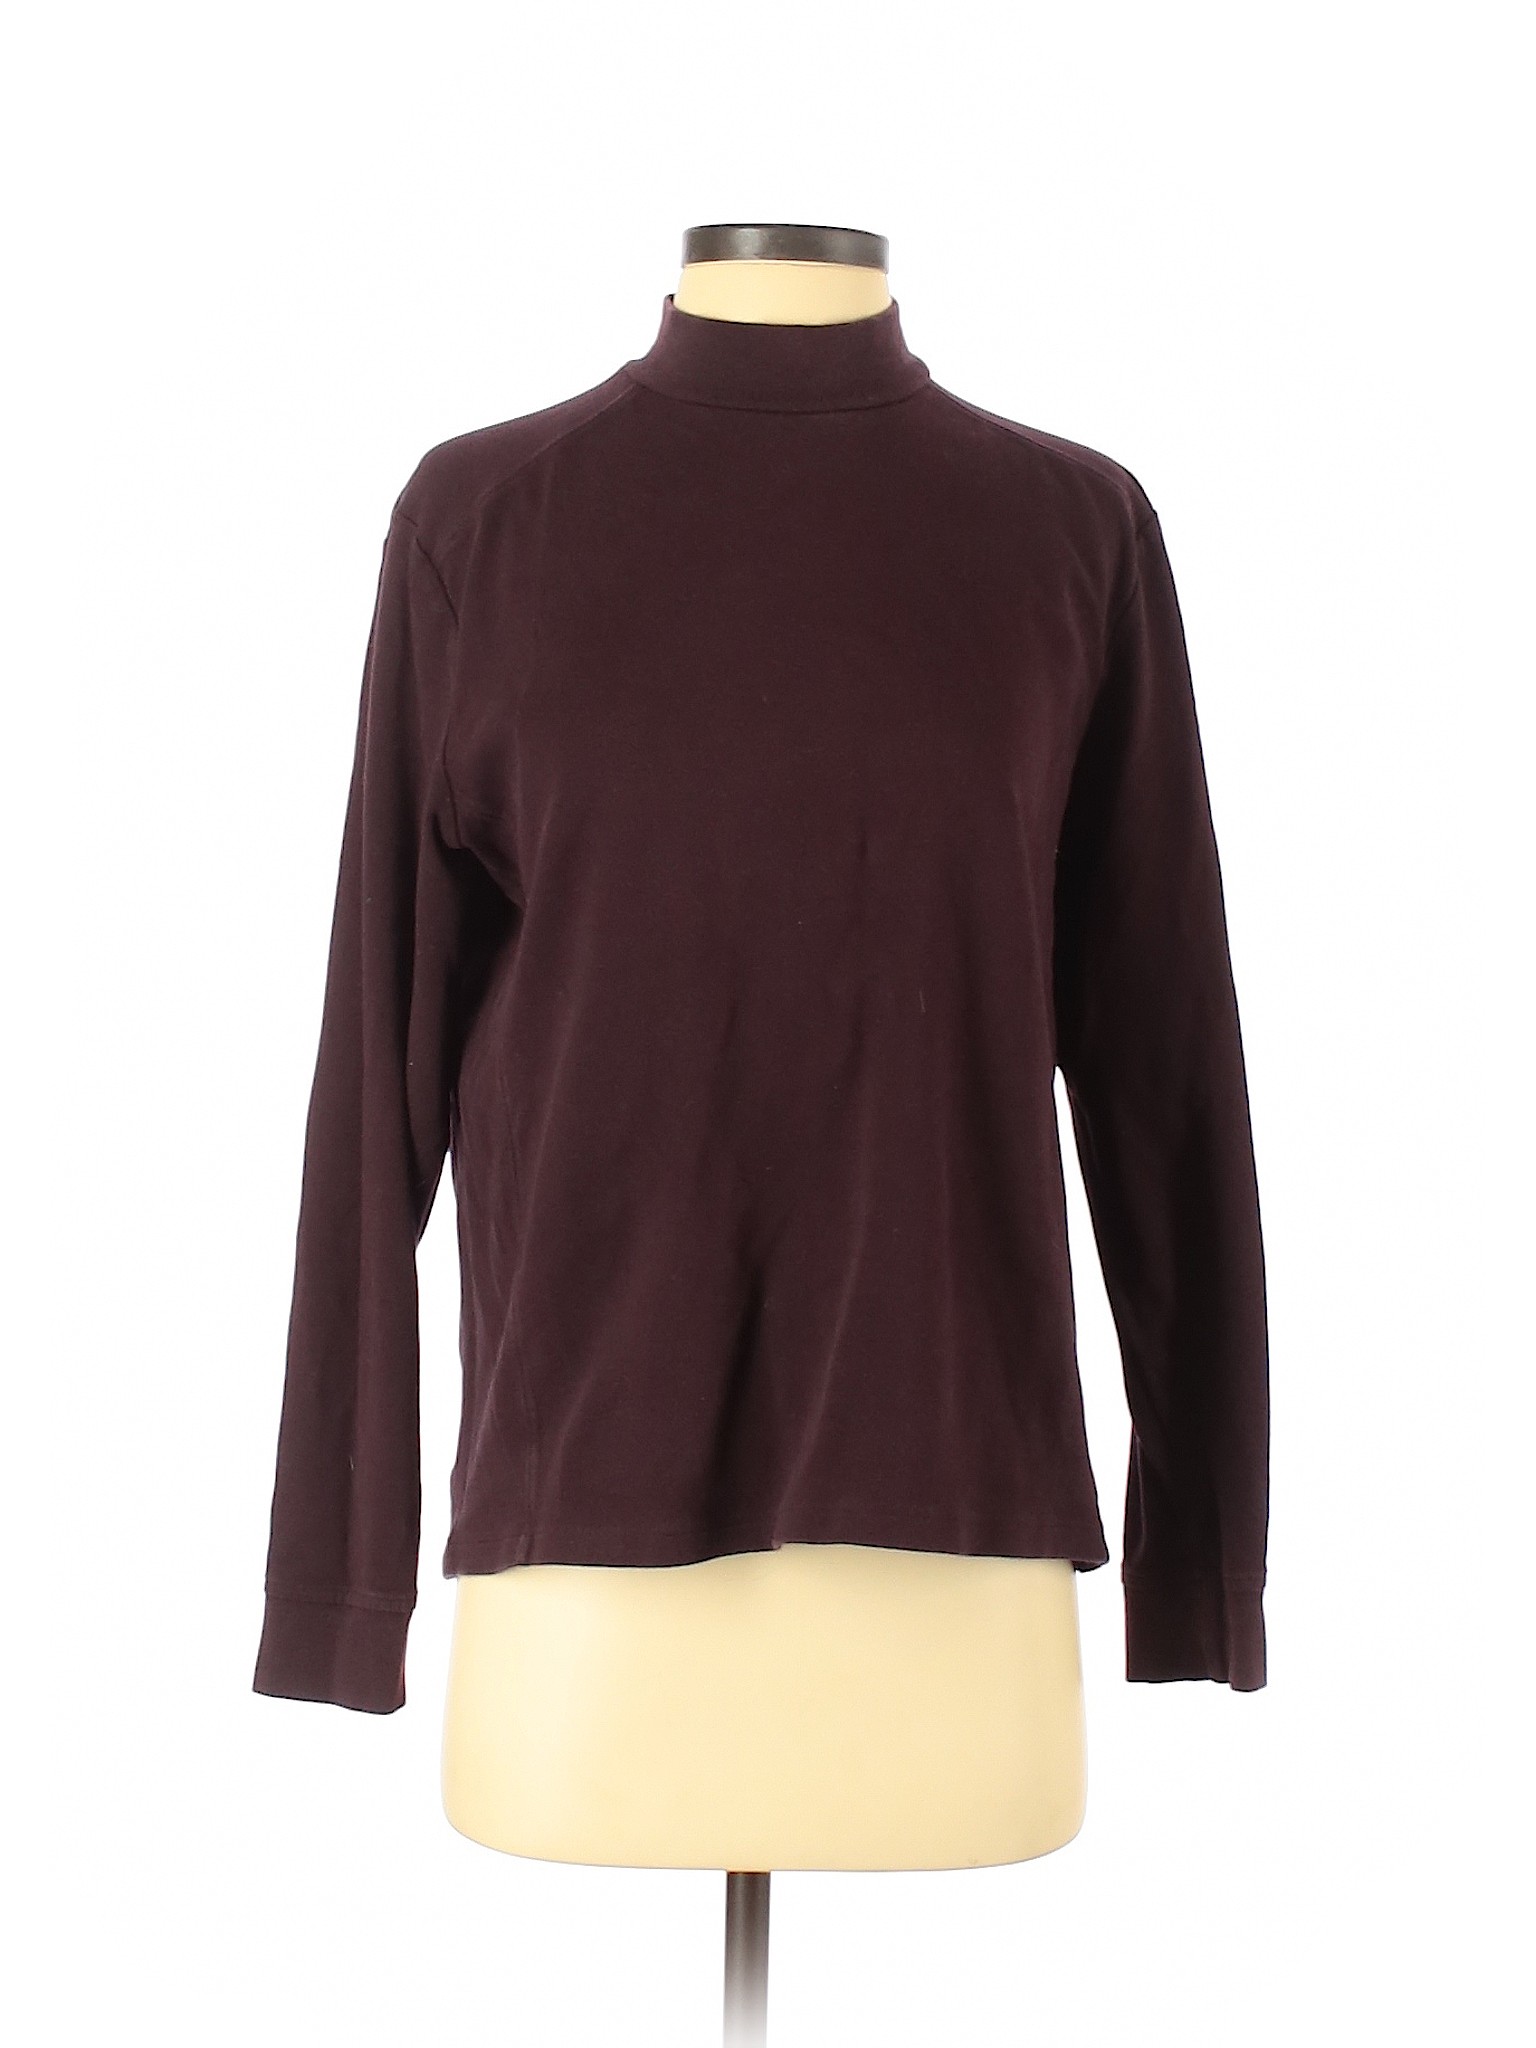 Calvin Klein Women Purple Long Sleeve T-Shirt S | eBay